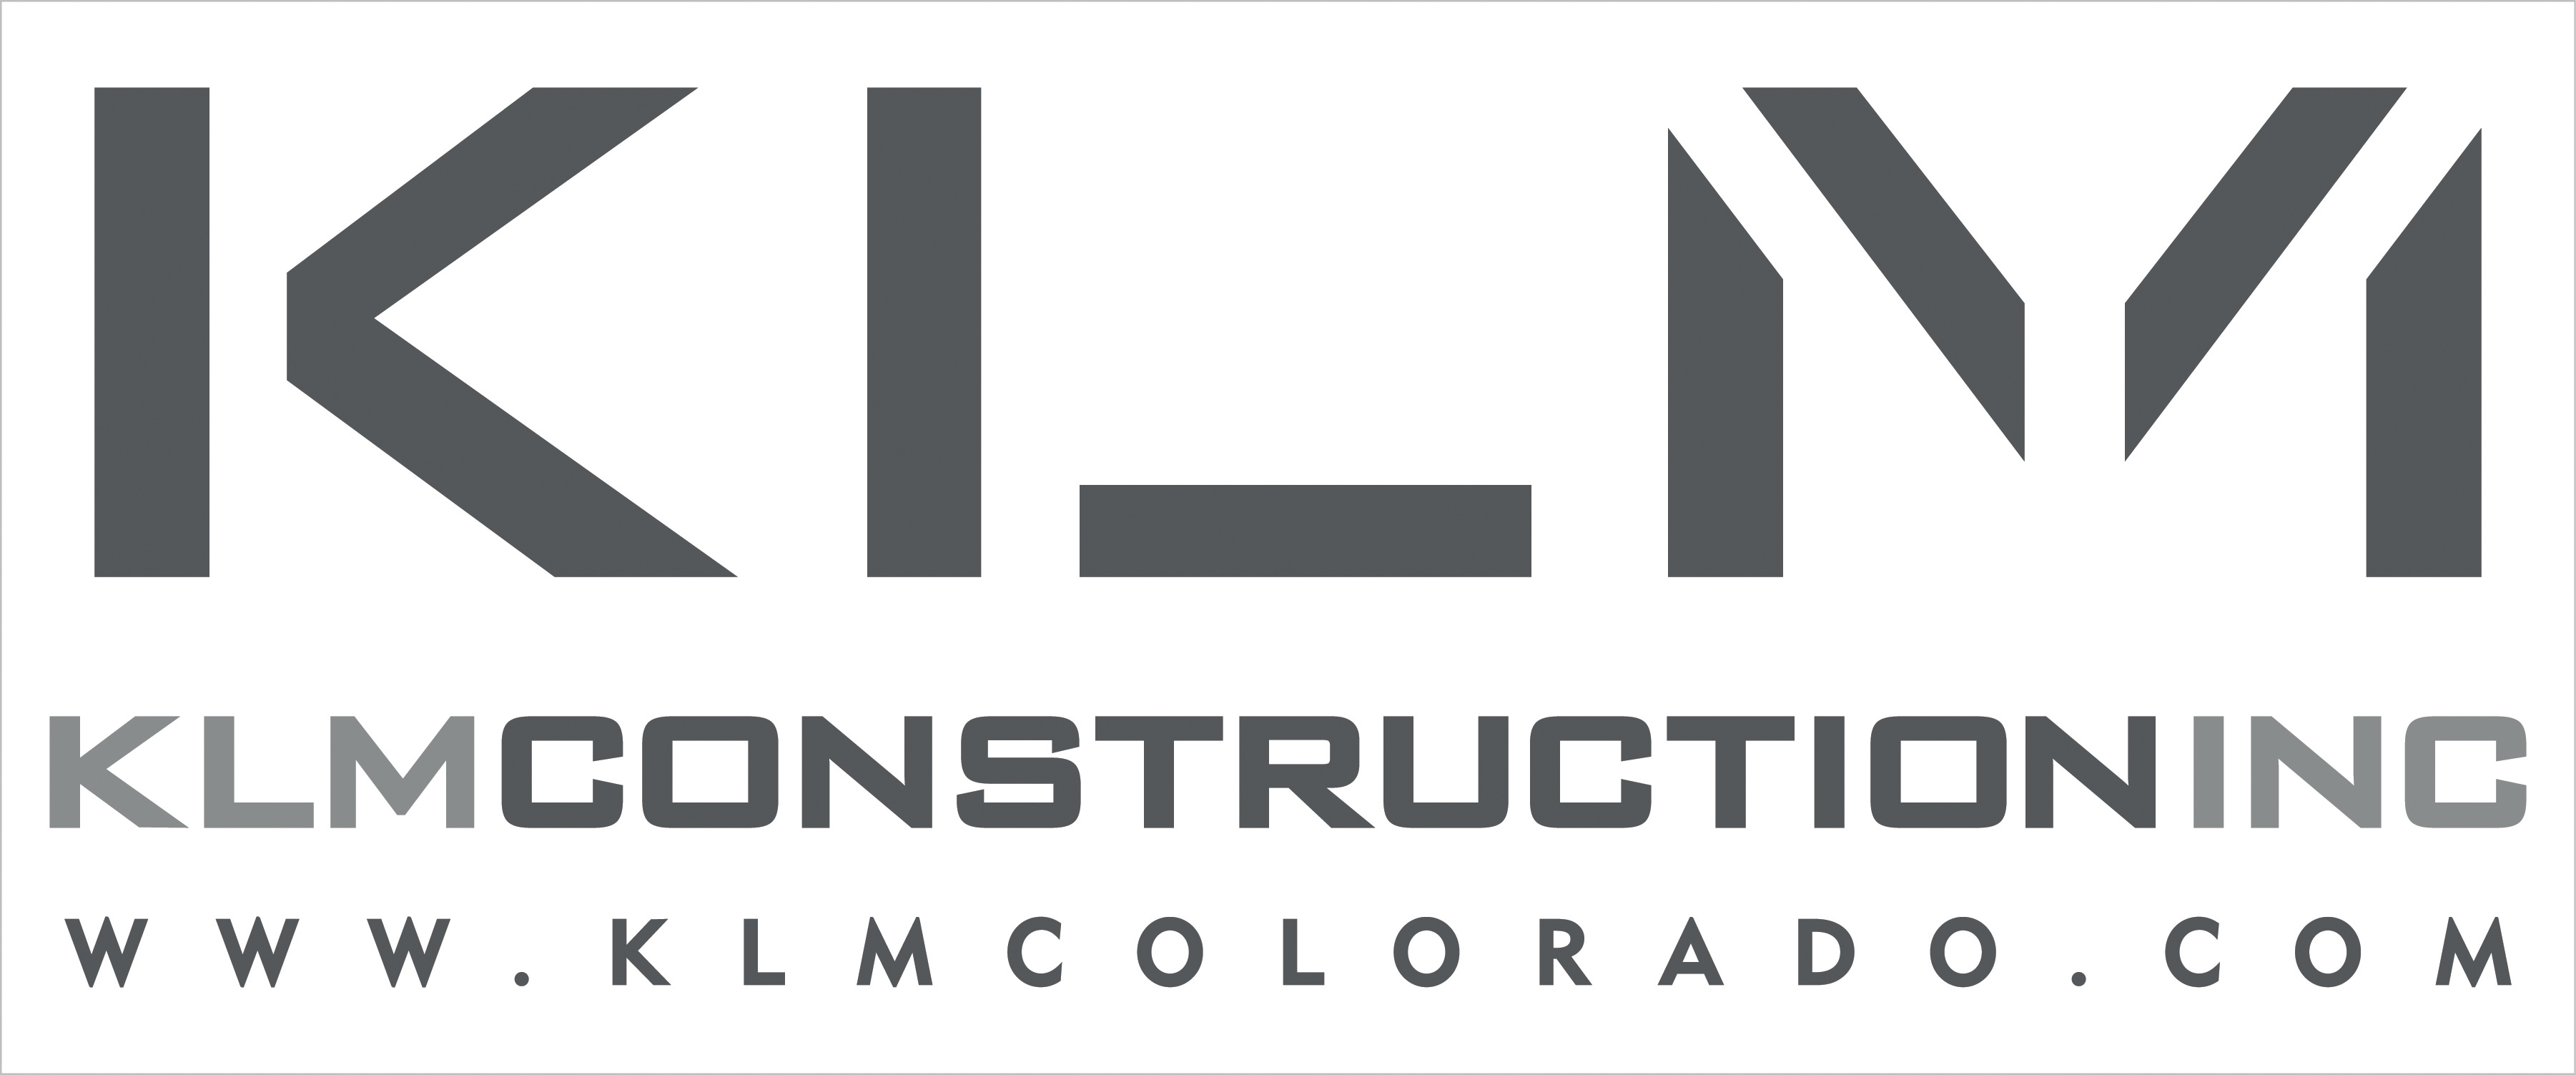 KLM Construction Inc company logo